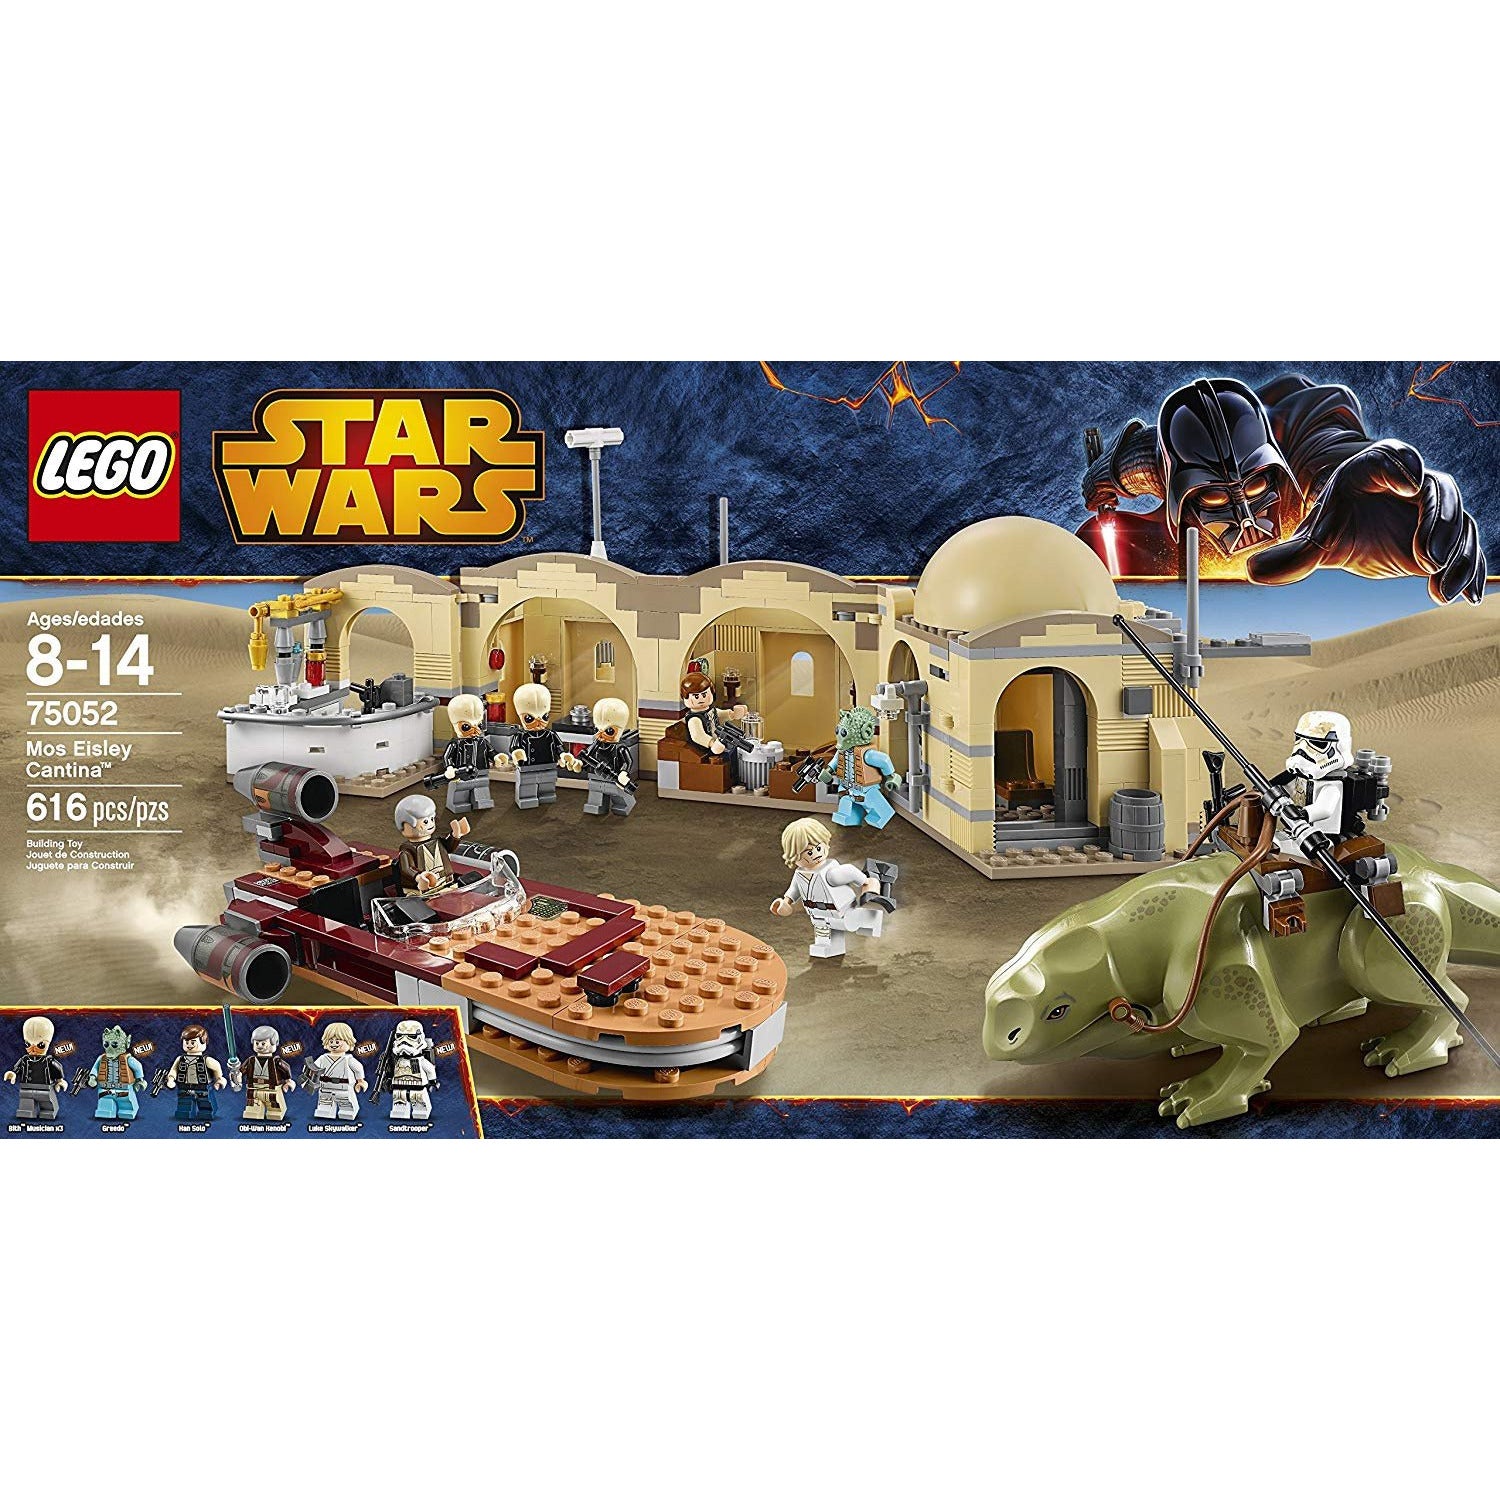 Lego Star Wars: Mos Eisley Cantina 75052 do not use